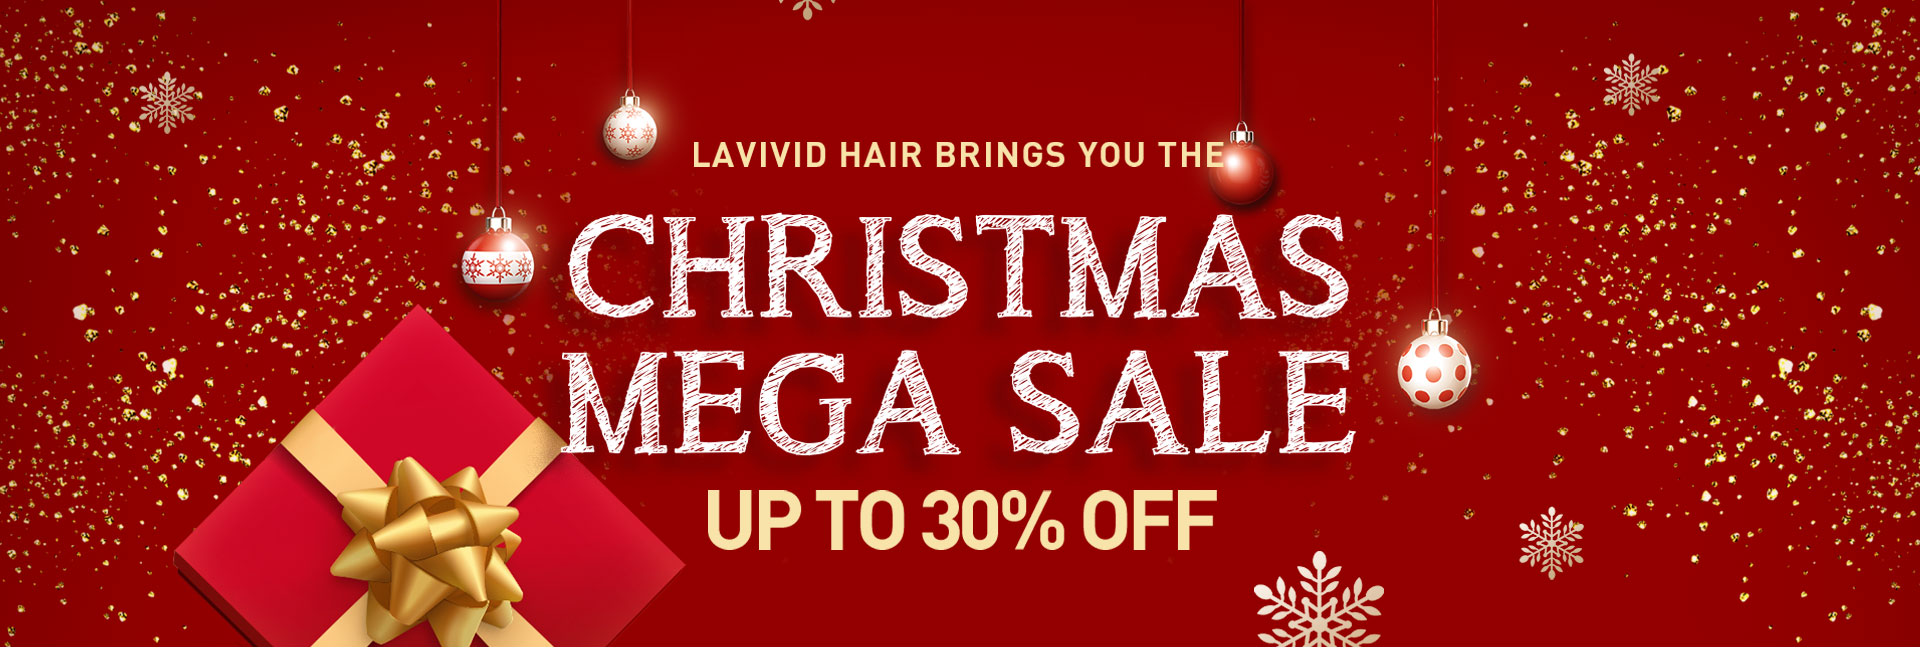 men s hair sales for christmas